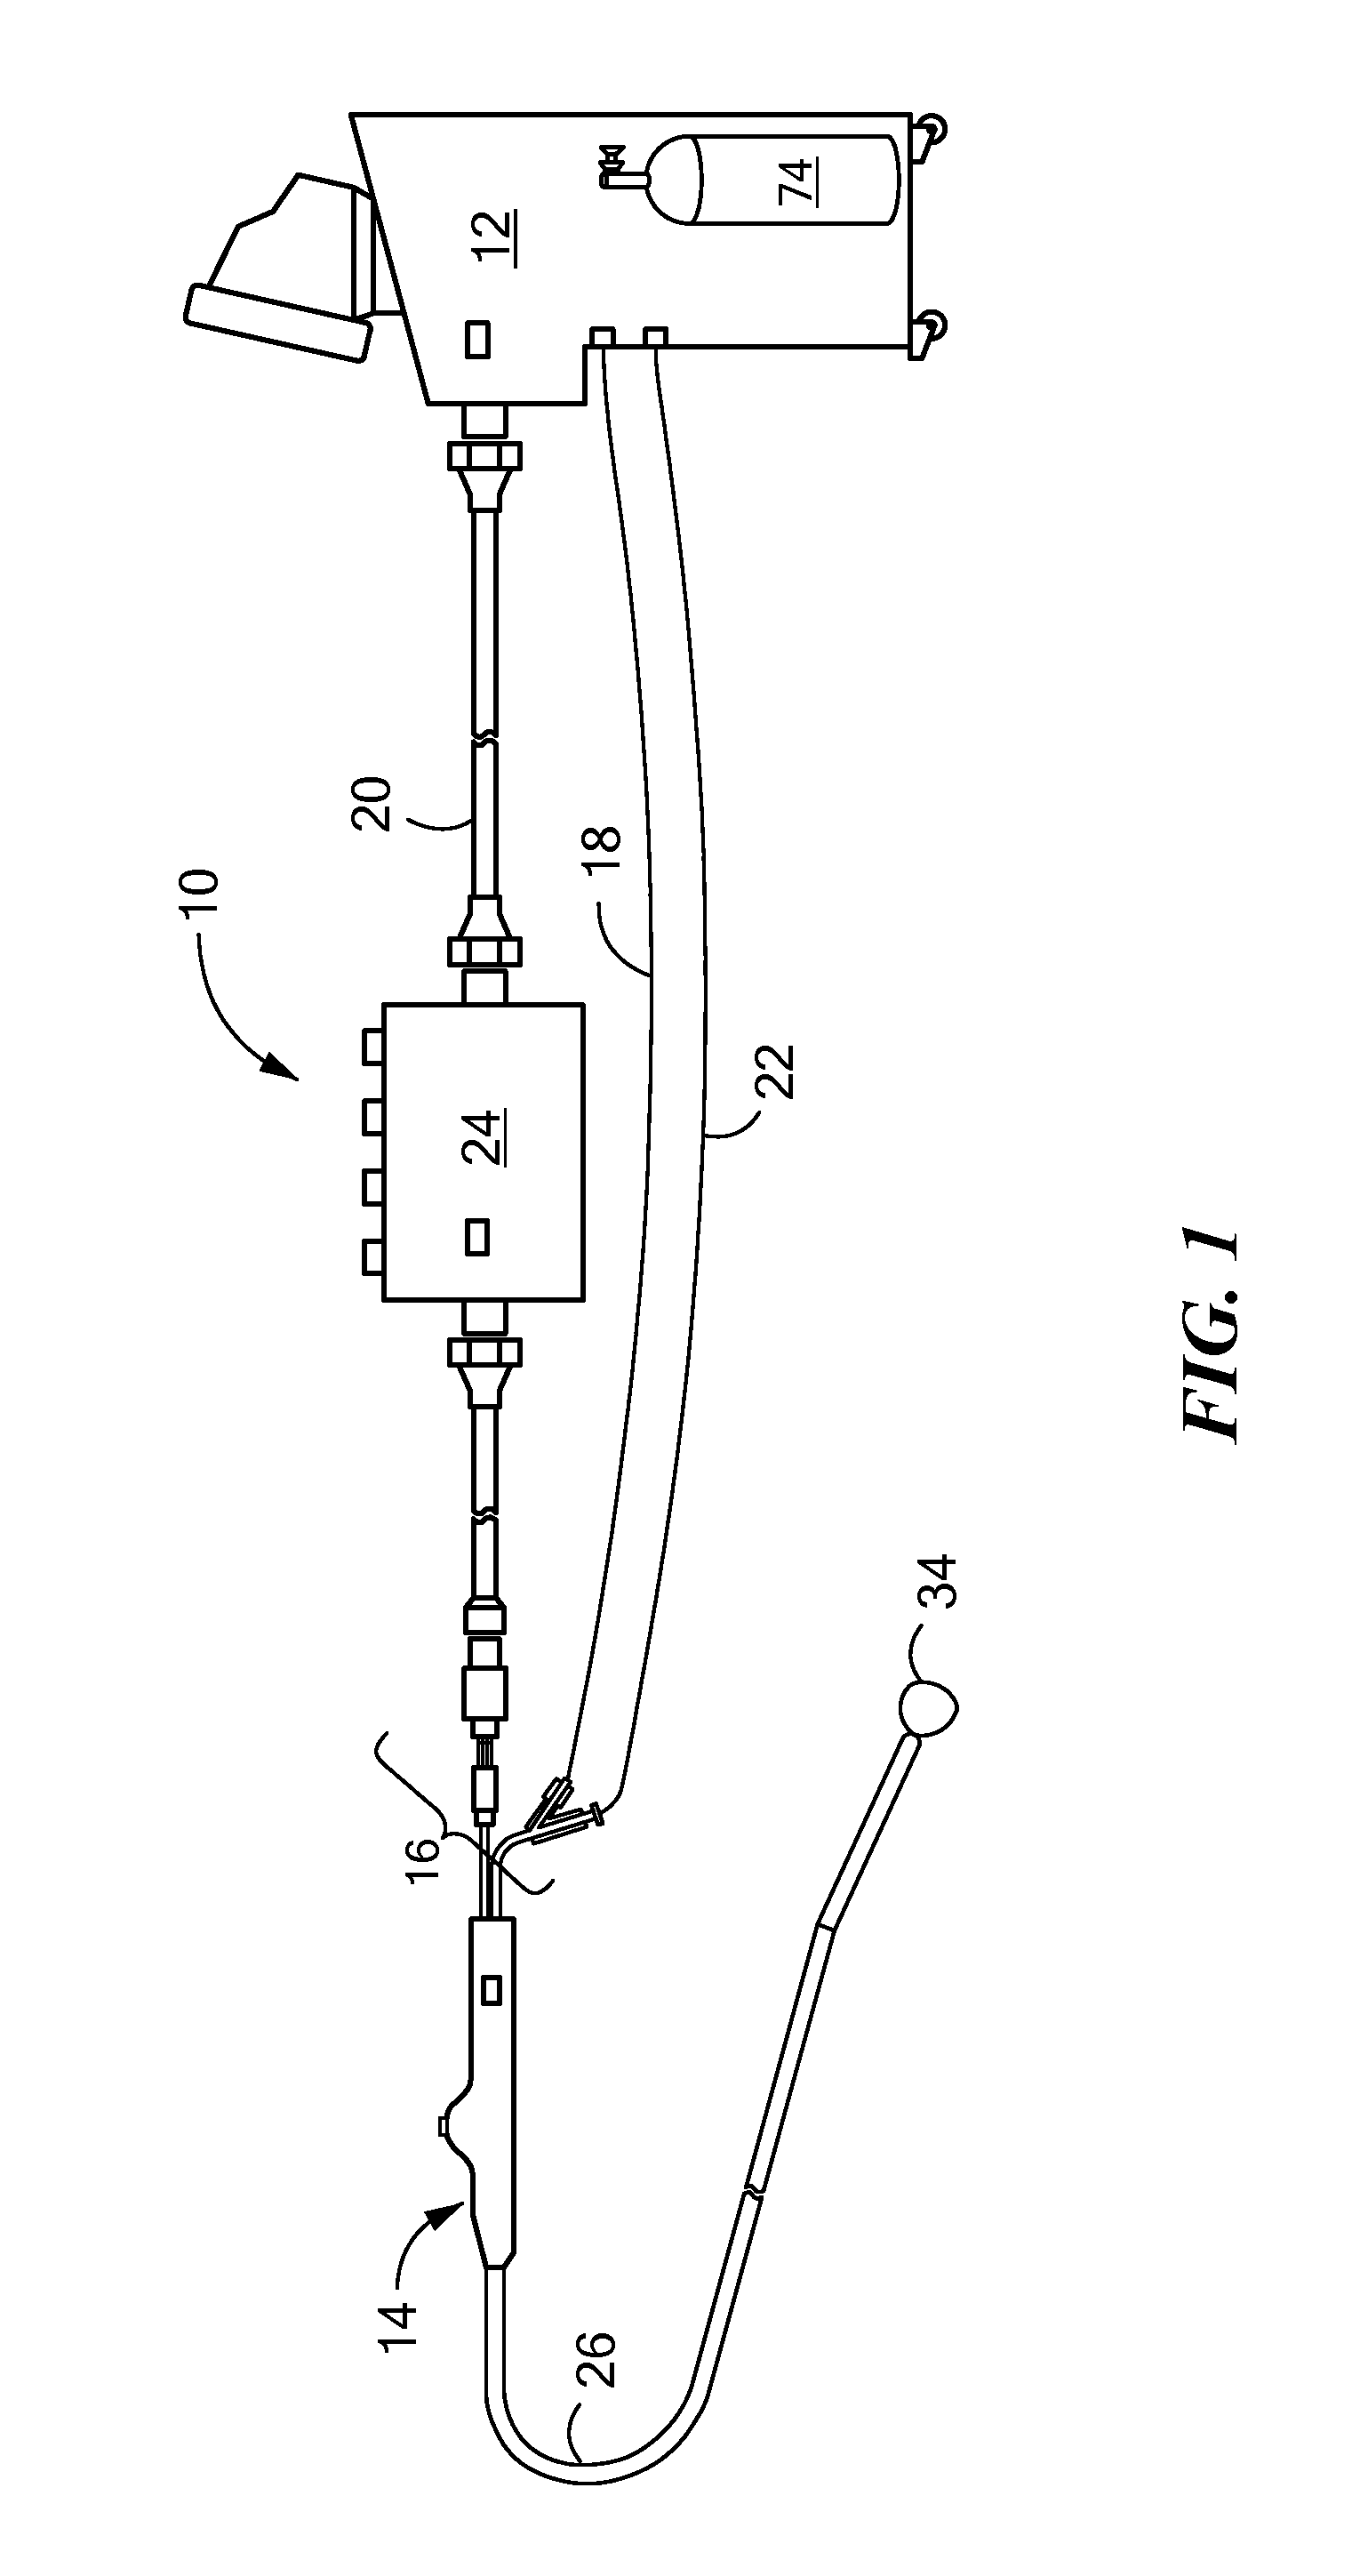 Dual injection tube cryocatheter and method for using same